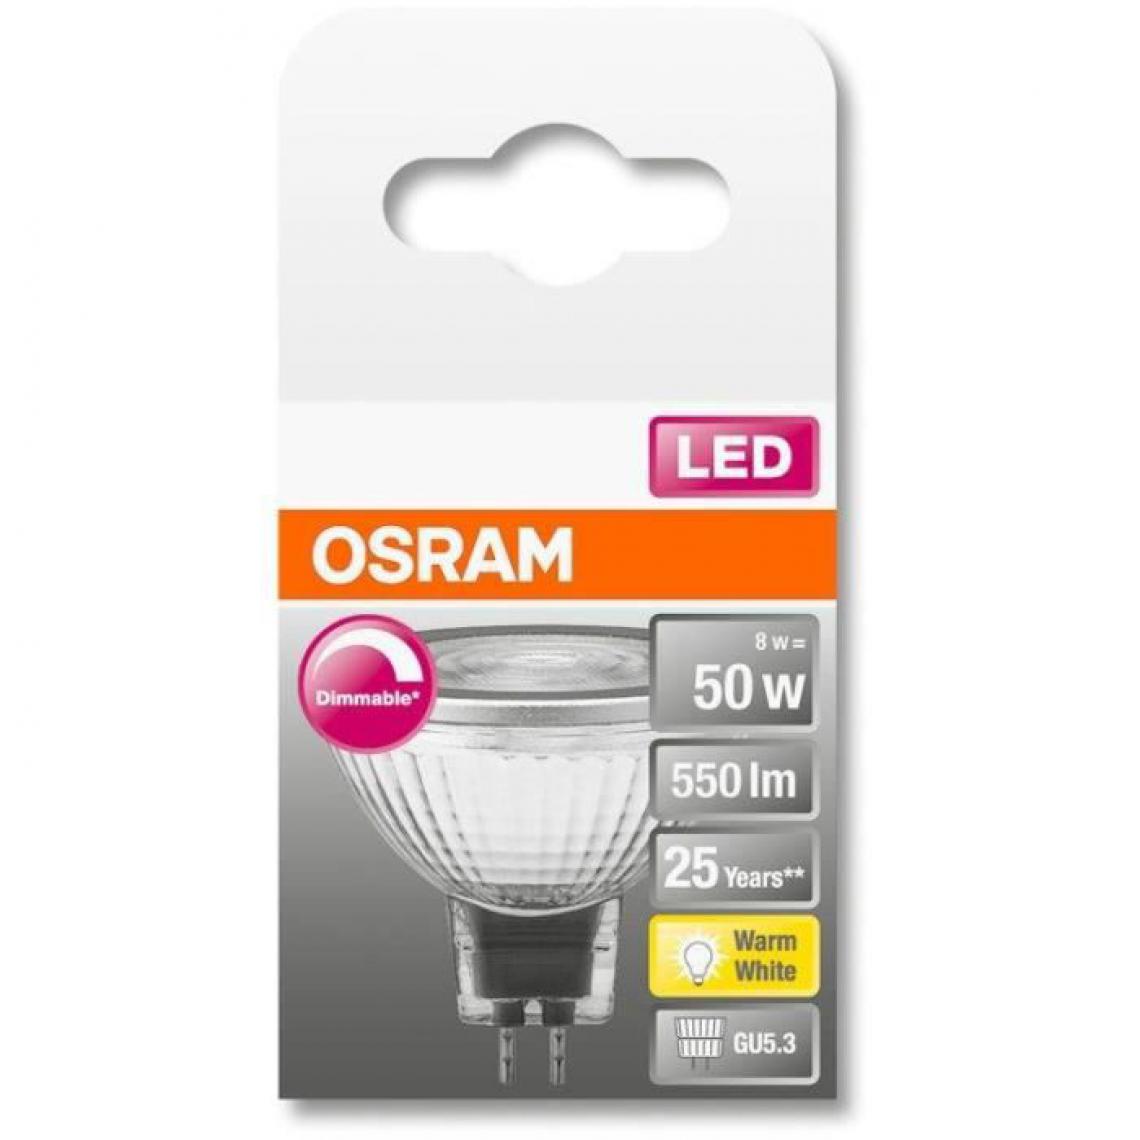 Osram - Spot MR16 LED 36° verre variable - 8W - Ampoules LED